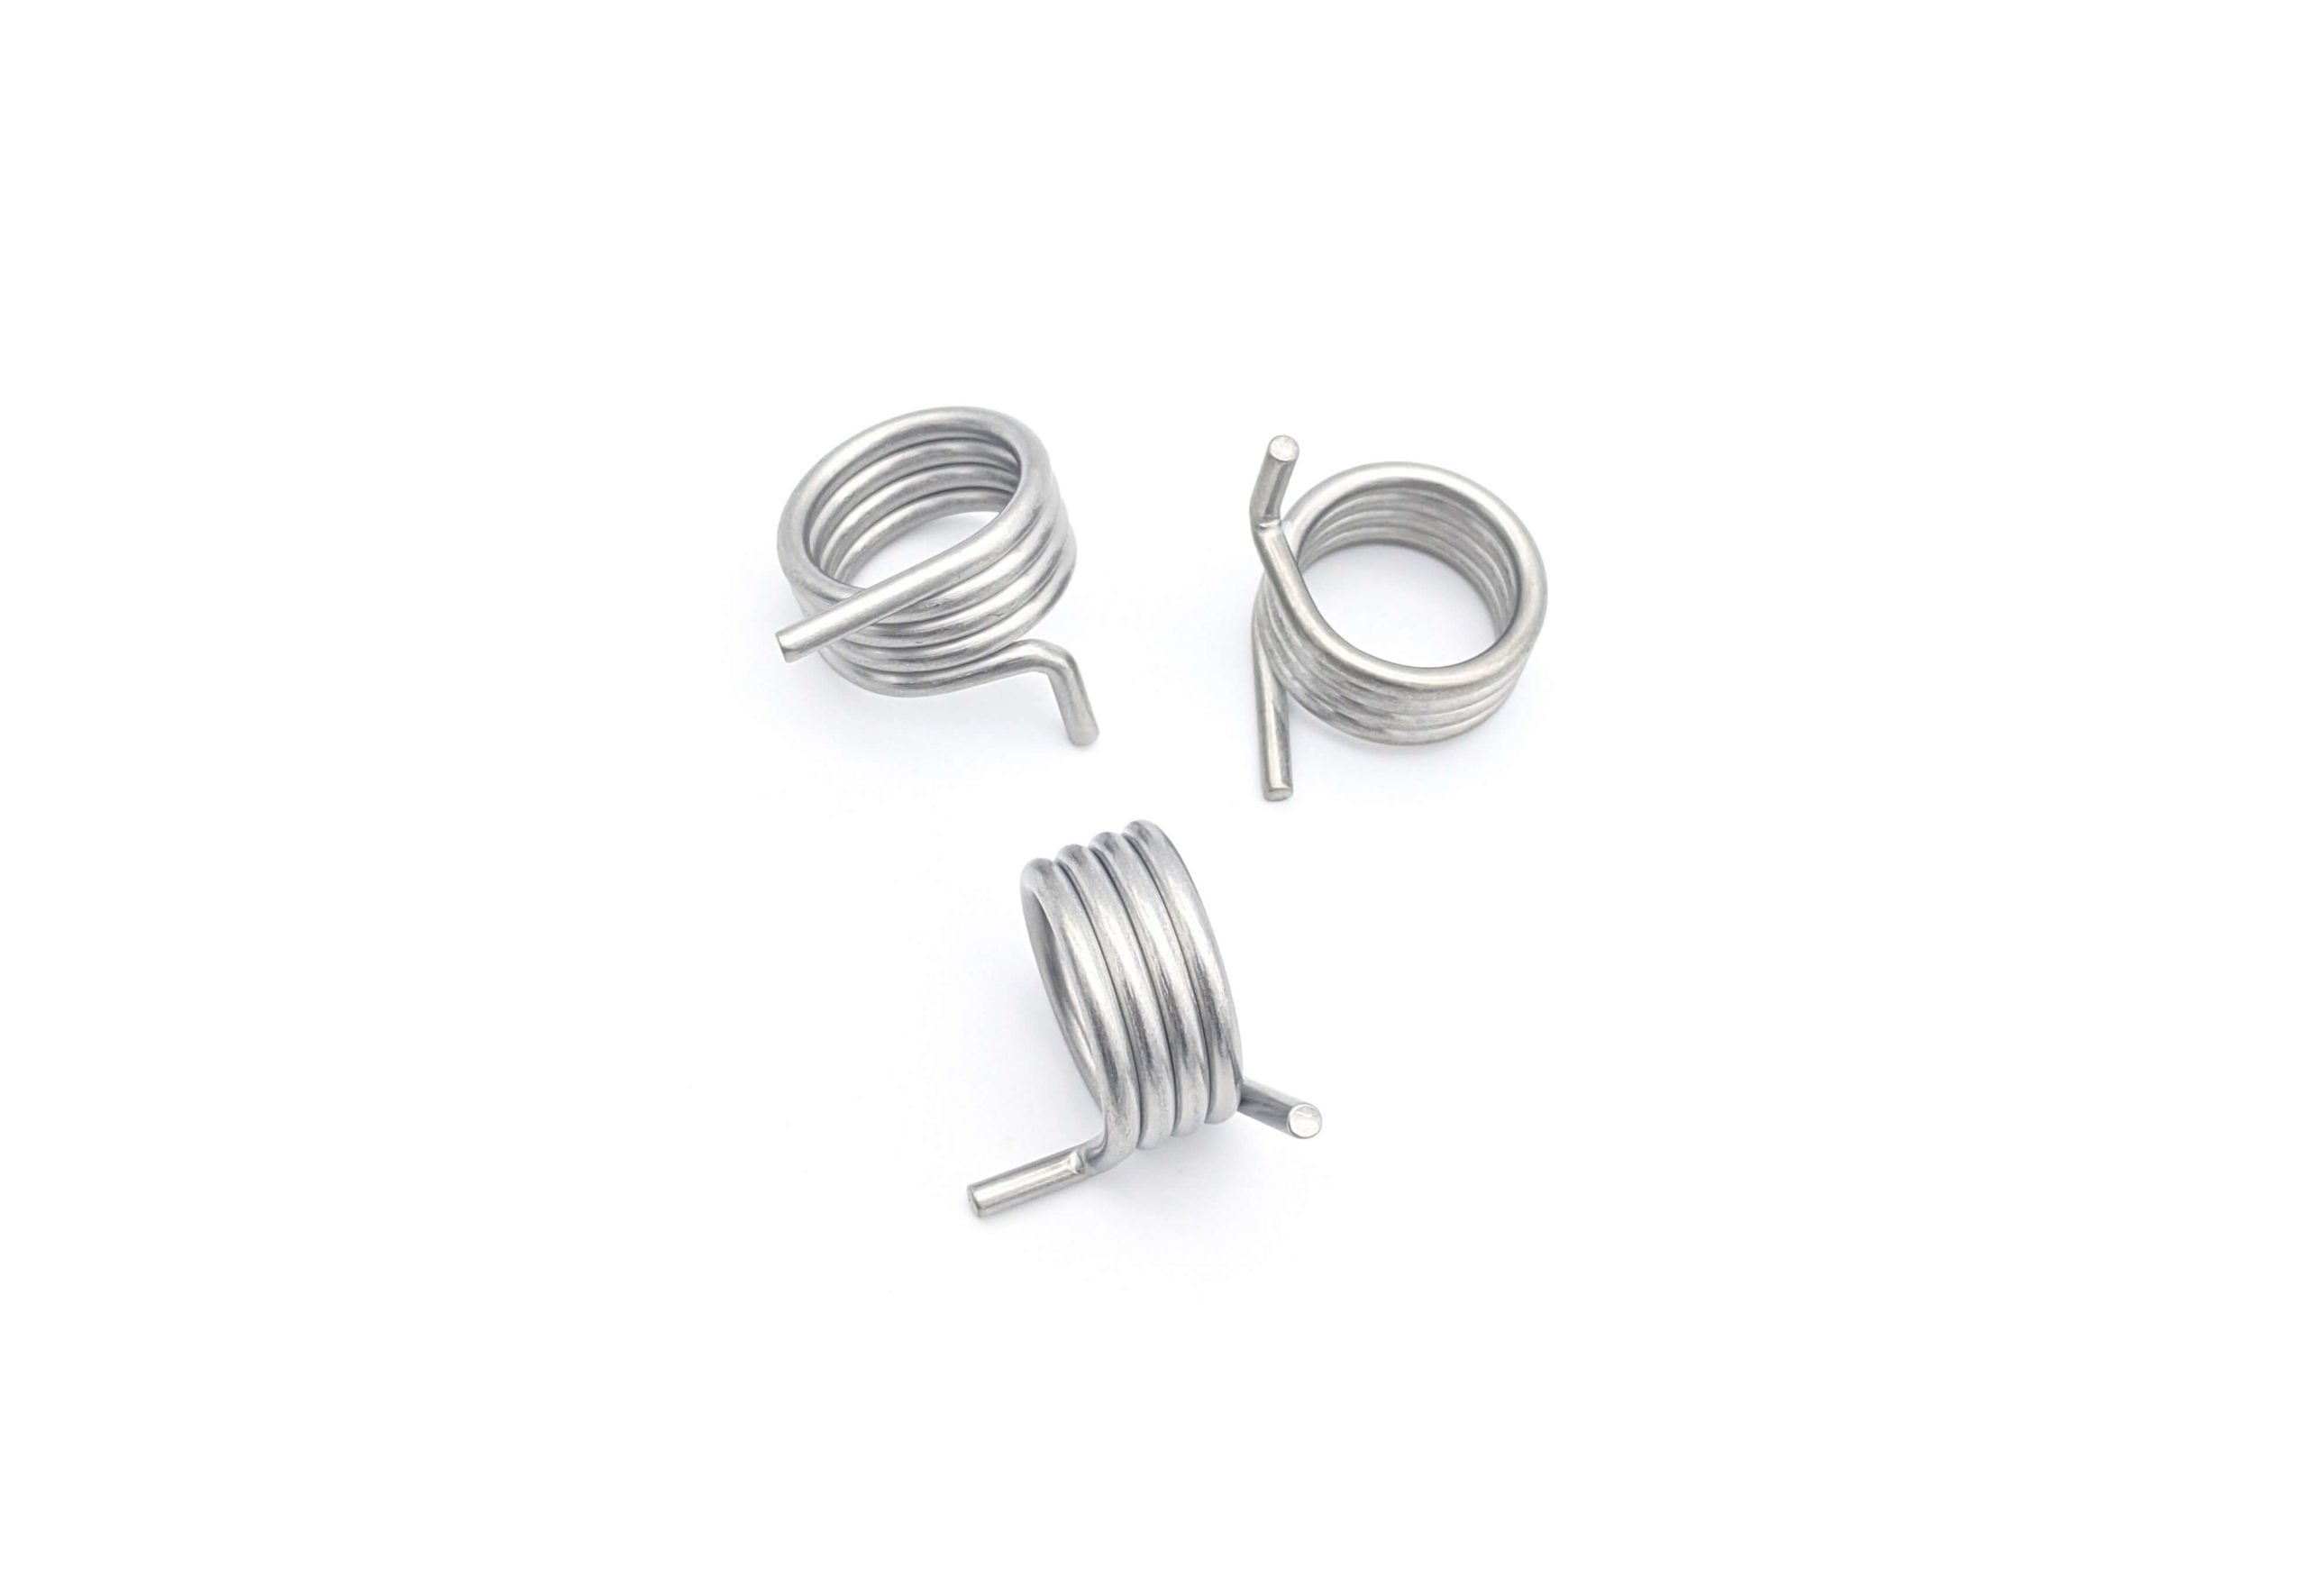 3 Stainless steel torsion springs